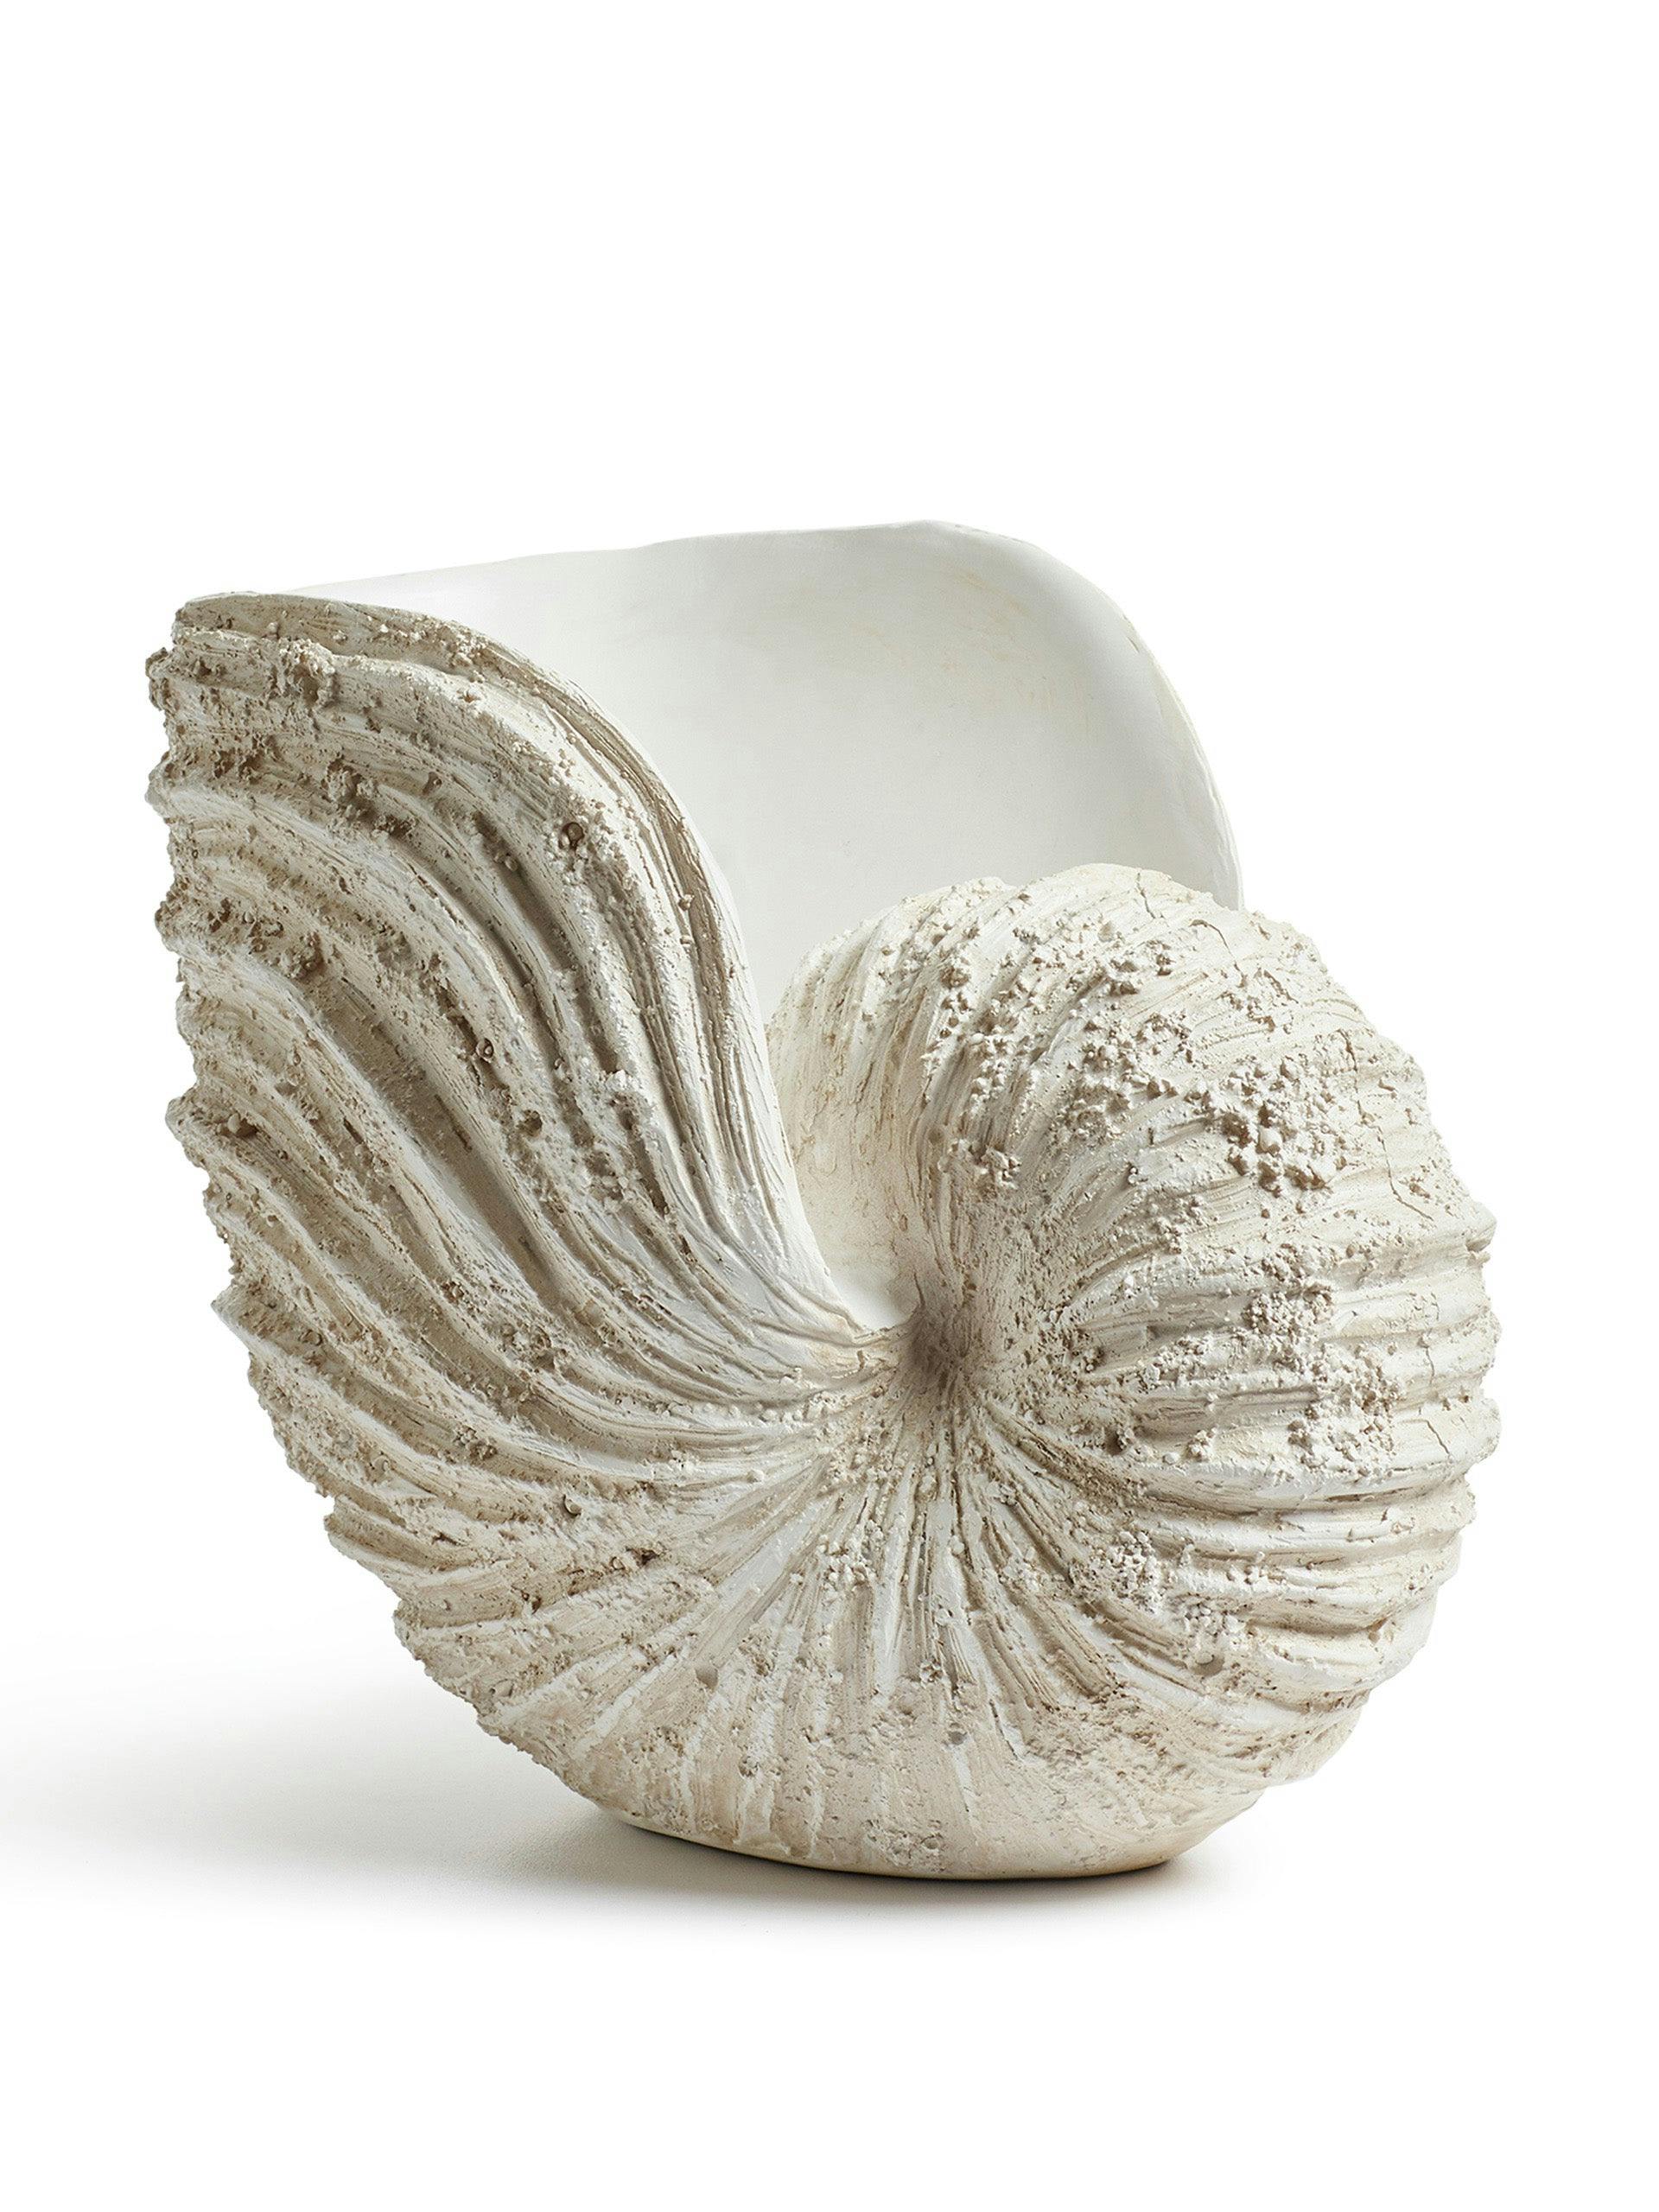 Handmade shell ornament